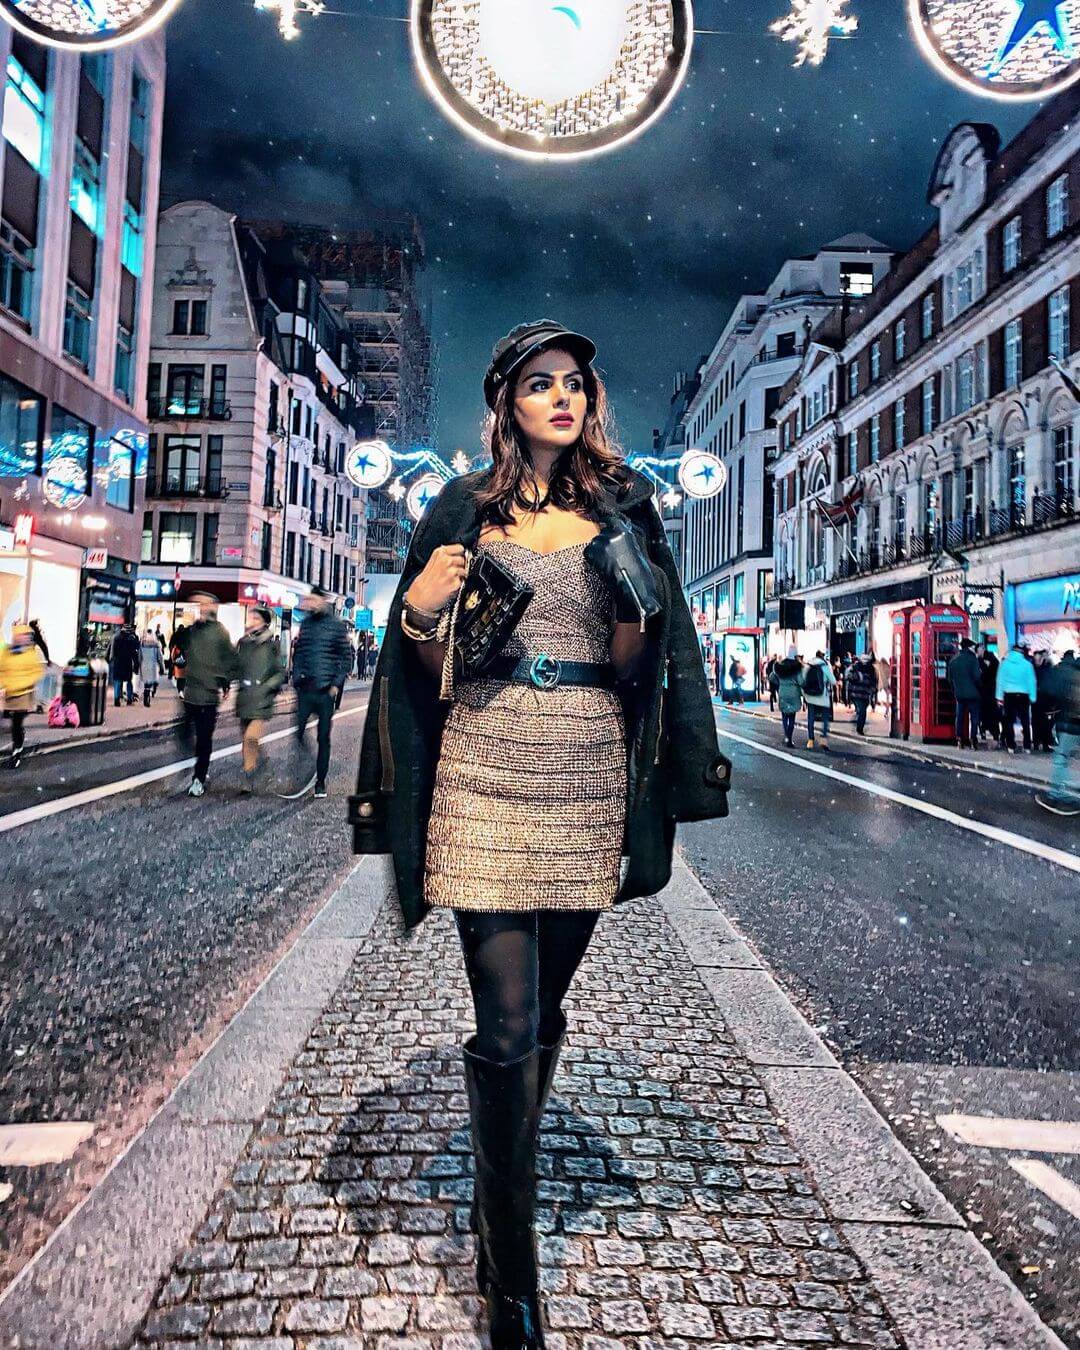 Fashionista Priyanka Choudhary London Vacation Look In Metallic Dress With Black Boots